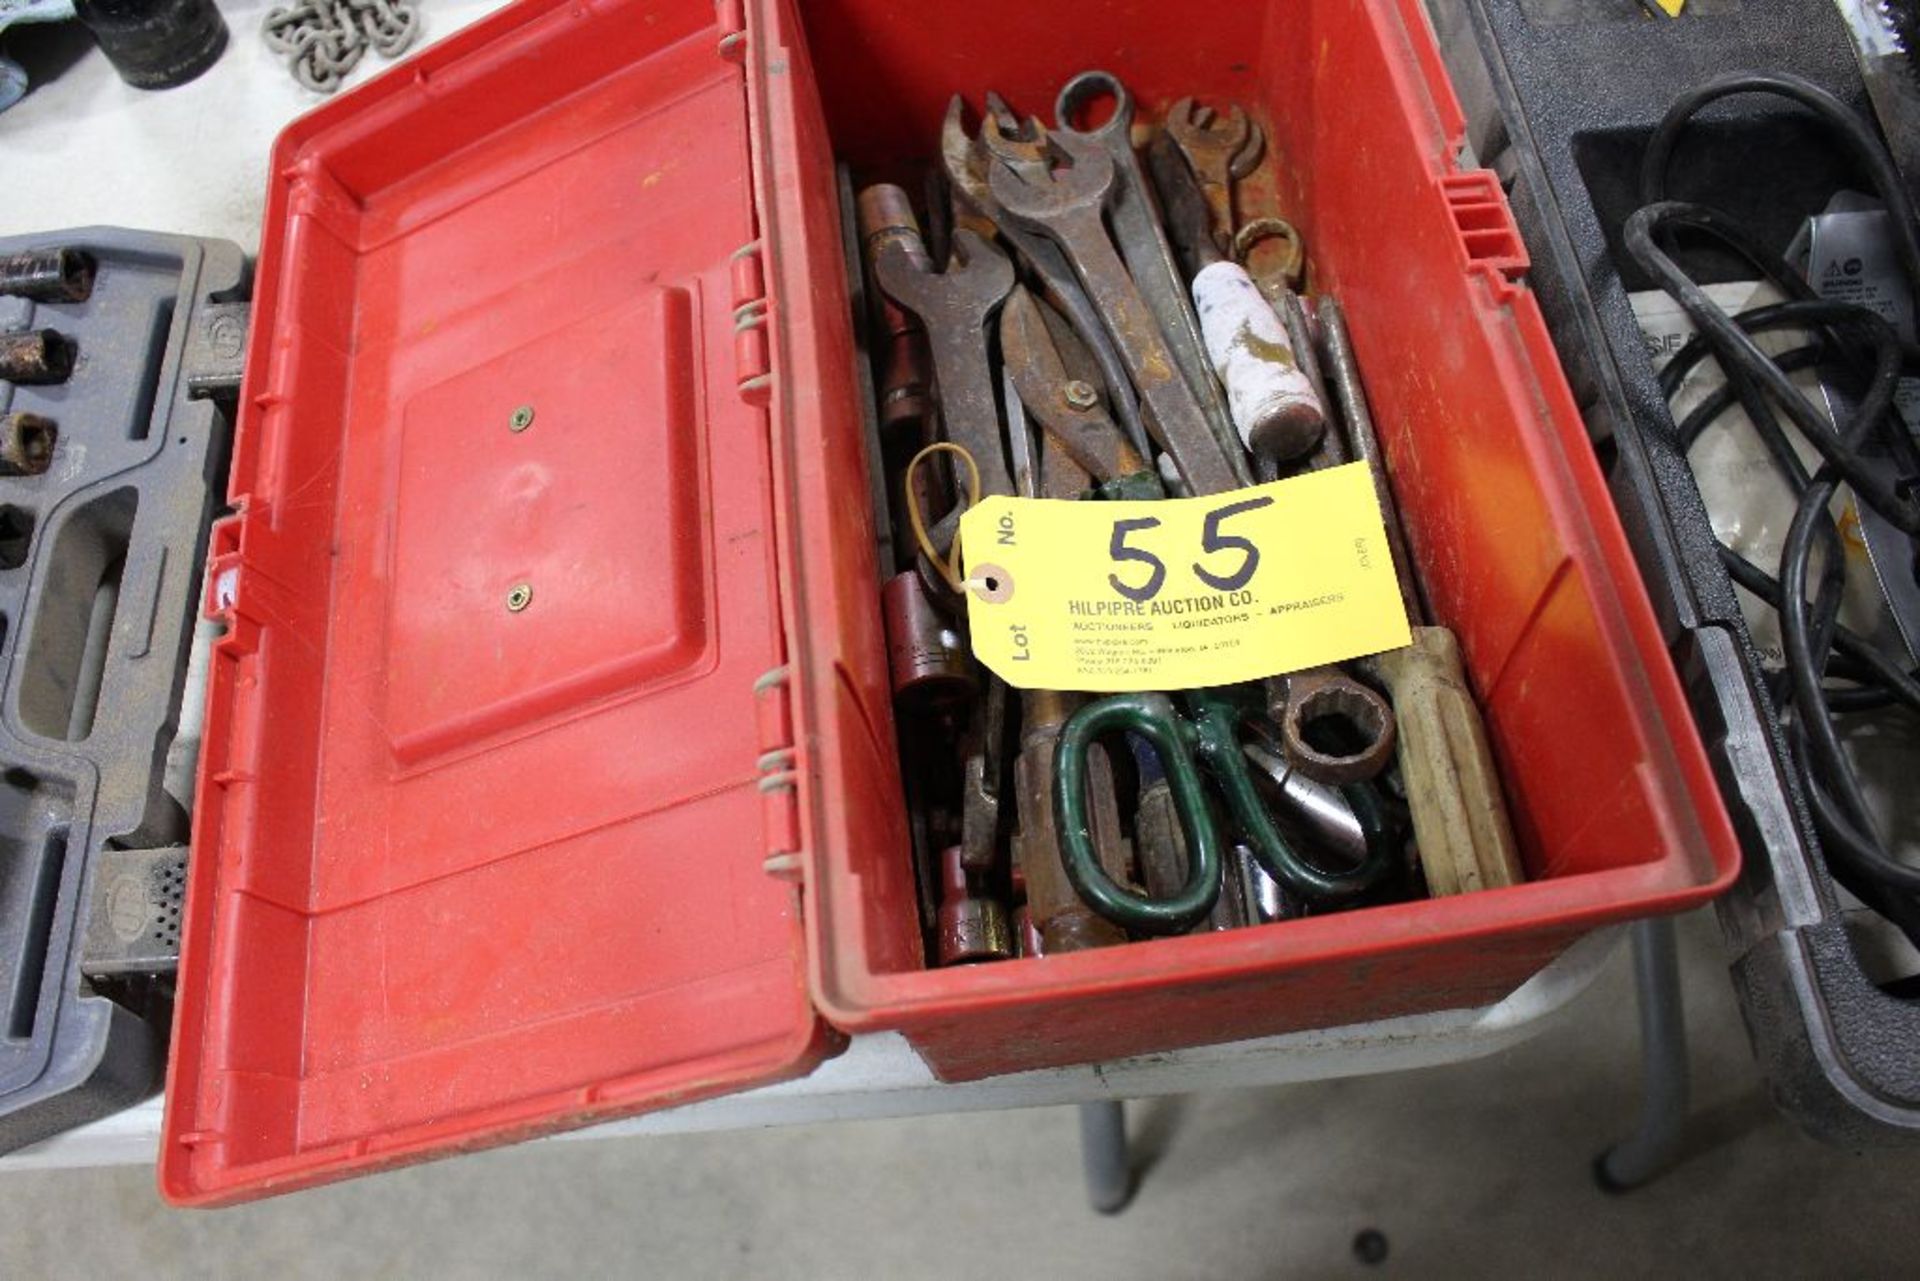 Misc. wrench, hand shear,sockets,drivers,tool box.